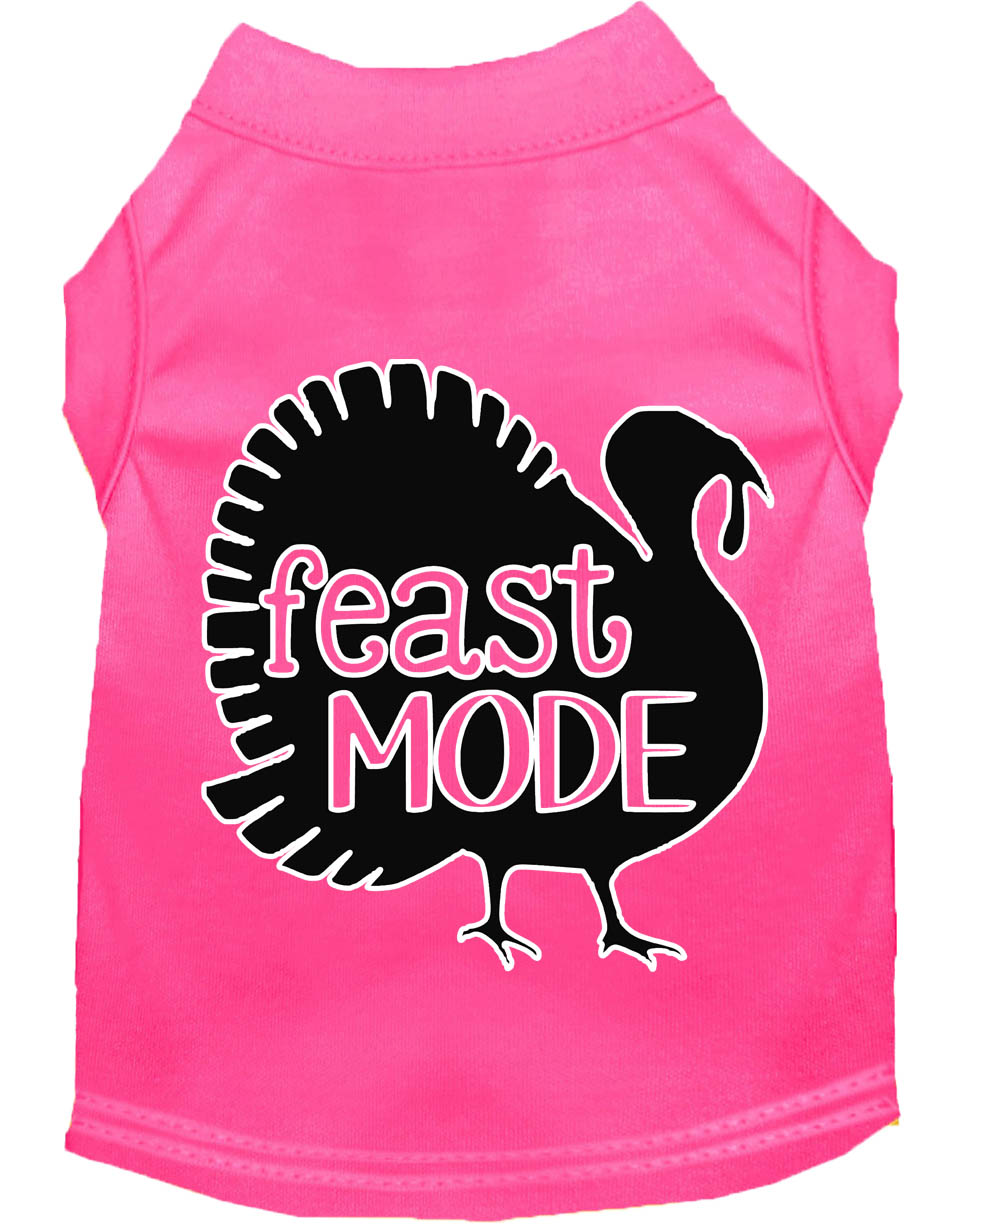 Feast Mode Screen Print Dog Shirt Bright Pink Med